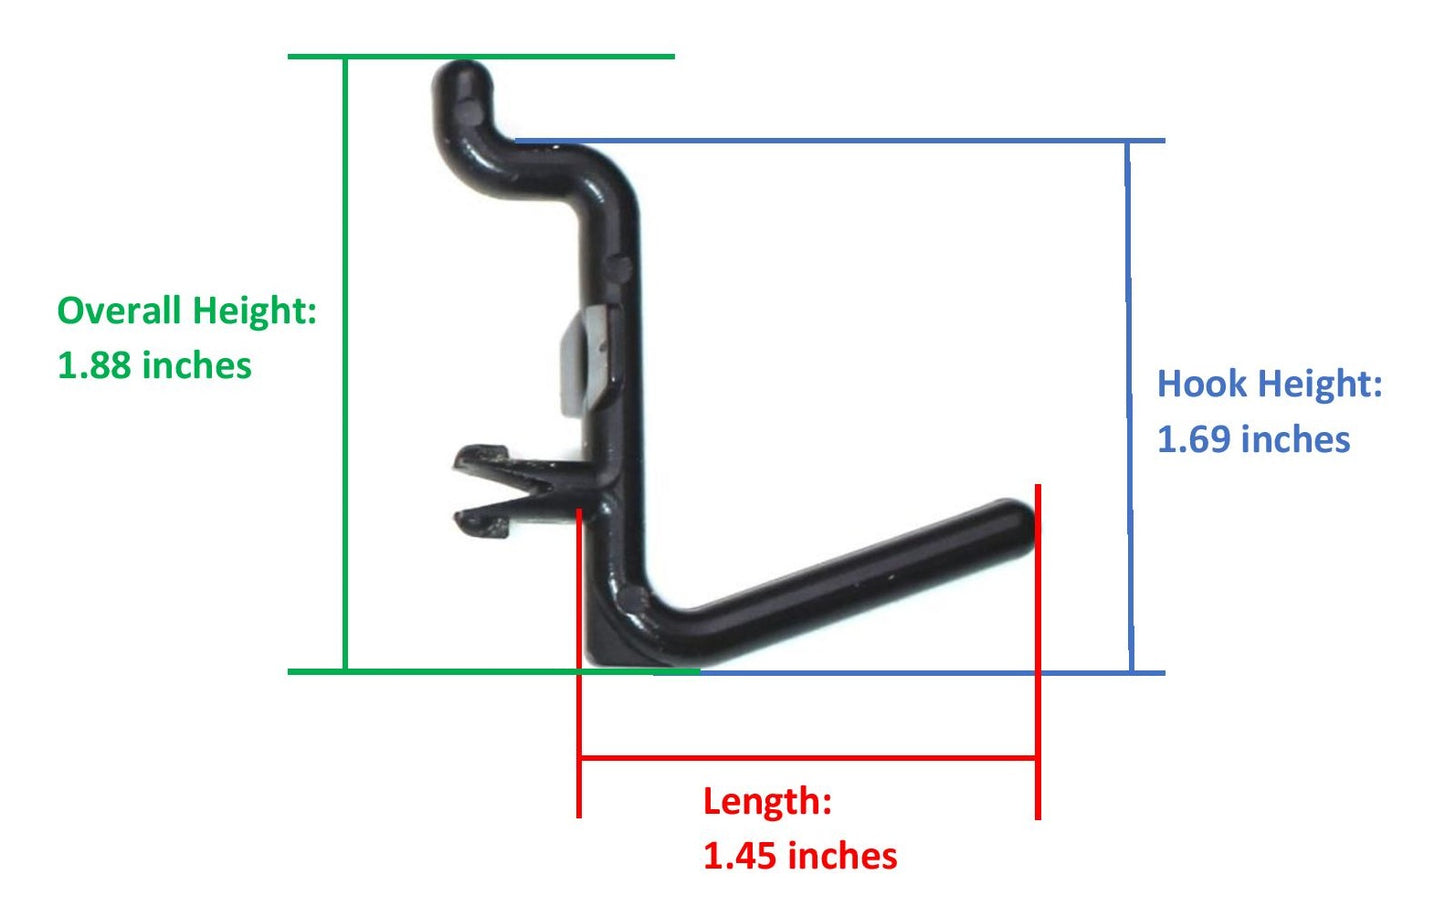 L Style Plastic Black Locking Pegboard Hook Kit - Multi-Pack / Garage storage jewelry tools crafts